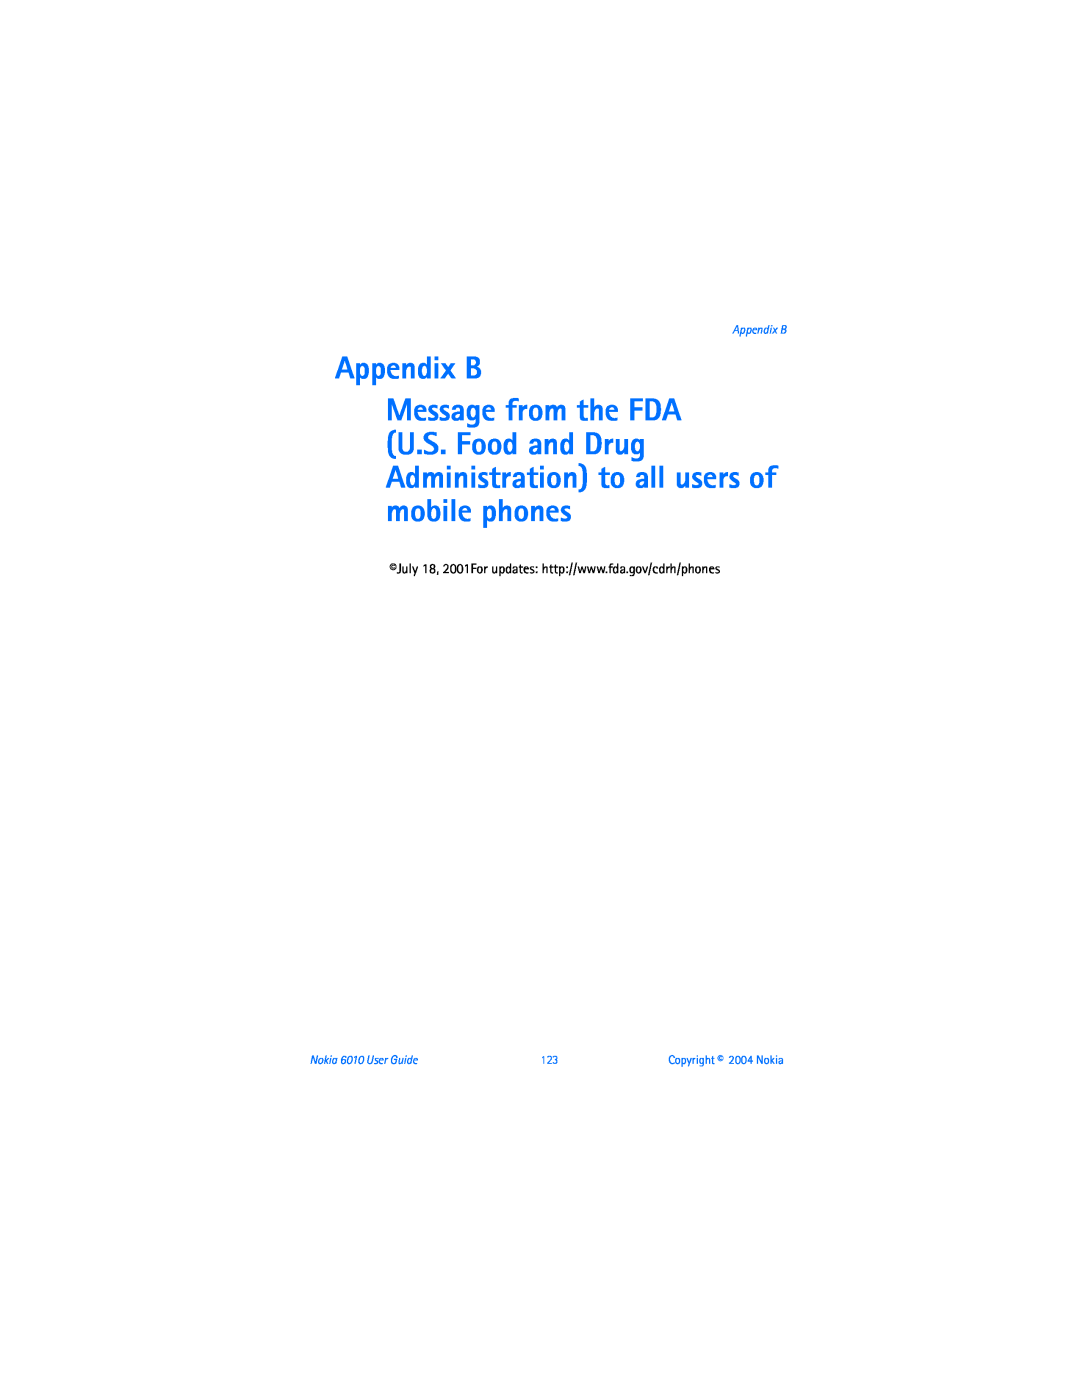 Nokia warranty Appendix B, Nokia 6010 User Guide, Copyright 2004 Nokia 